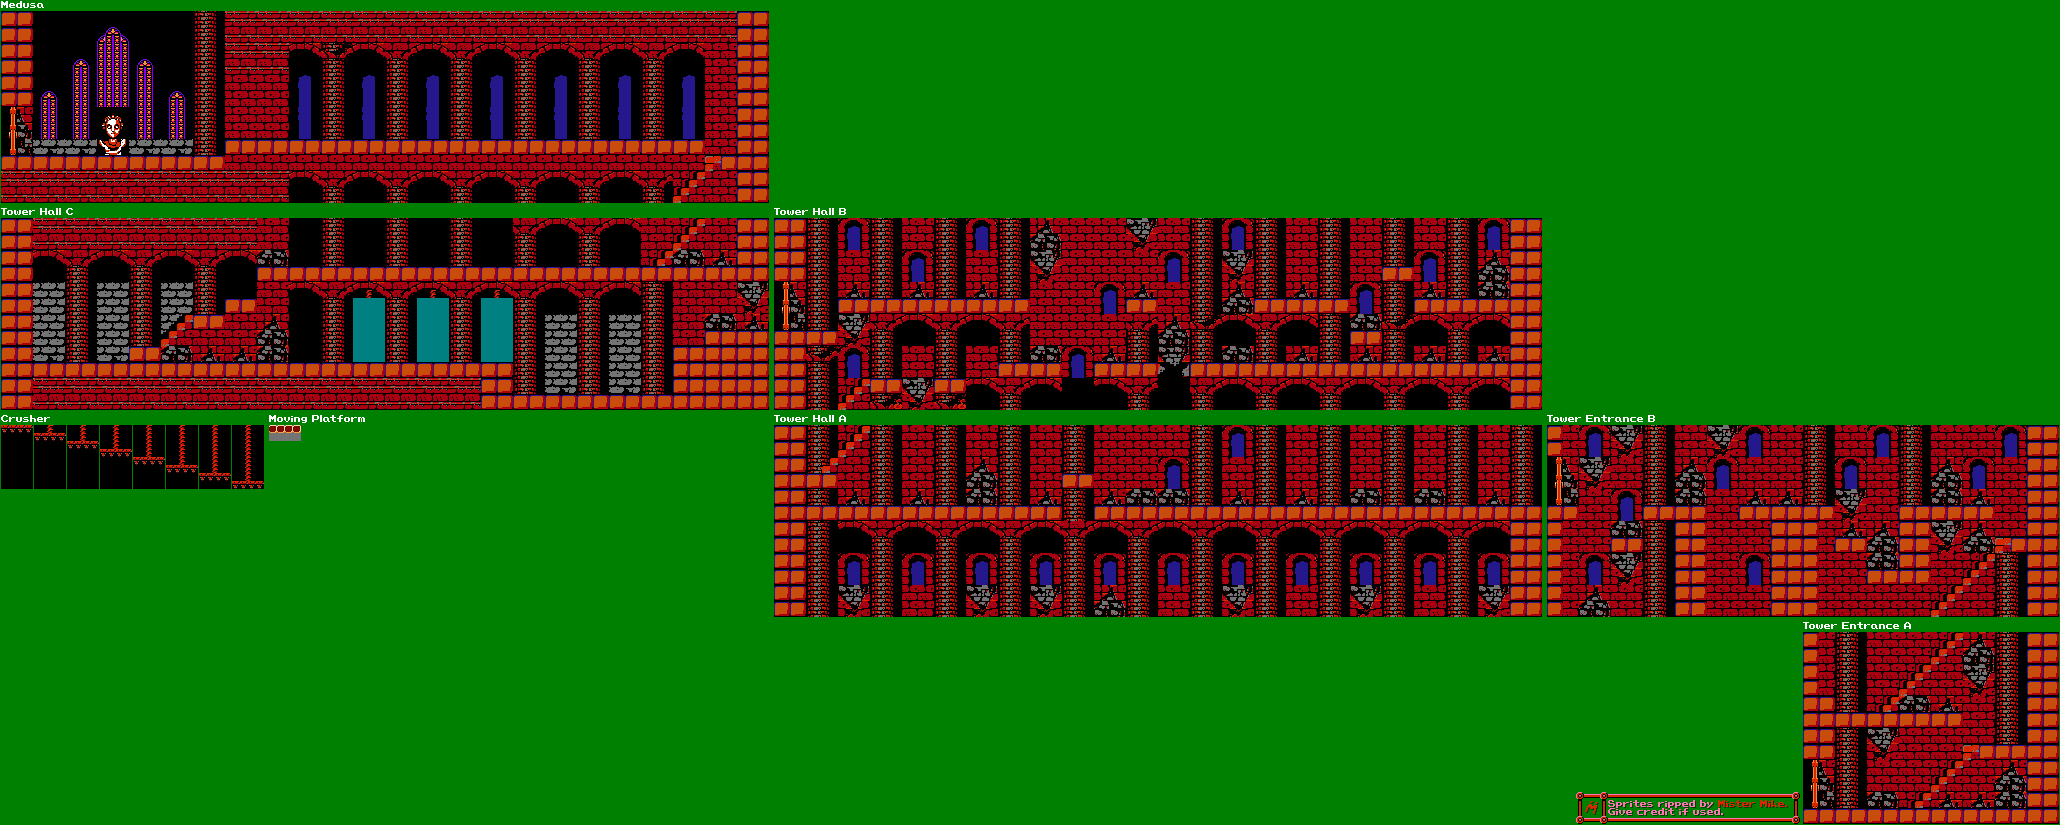 Castlevania - Level 2: Main Hall